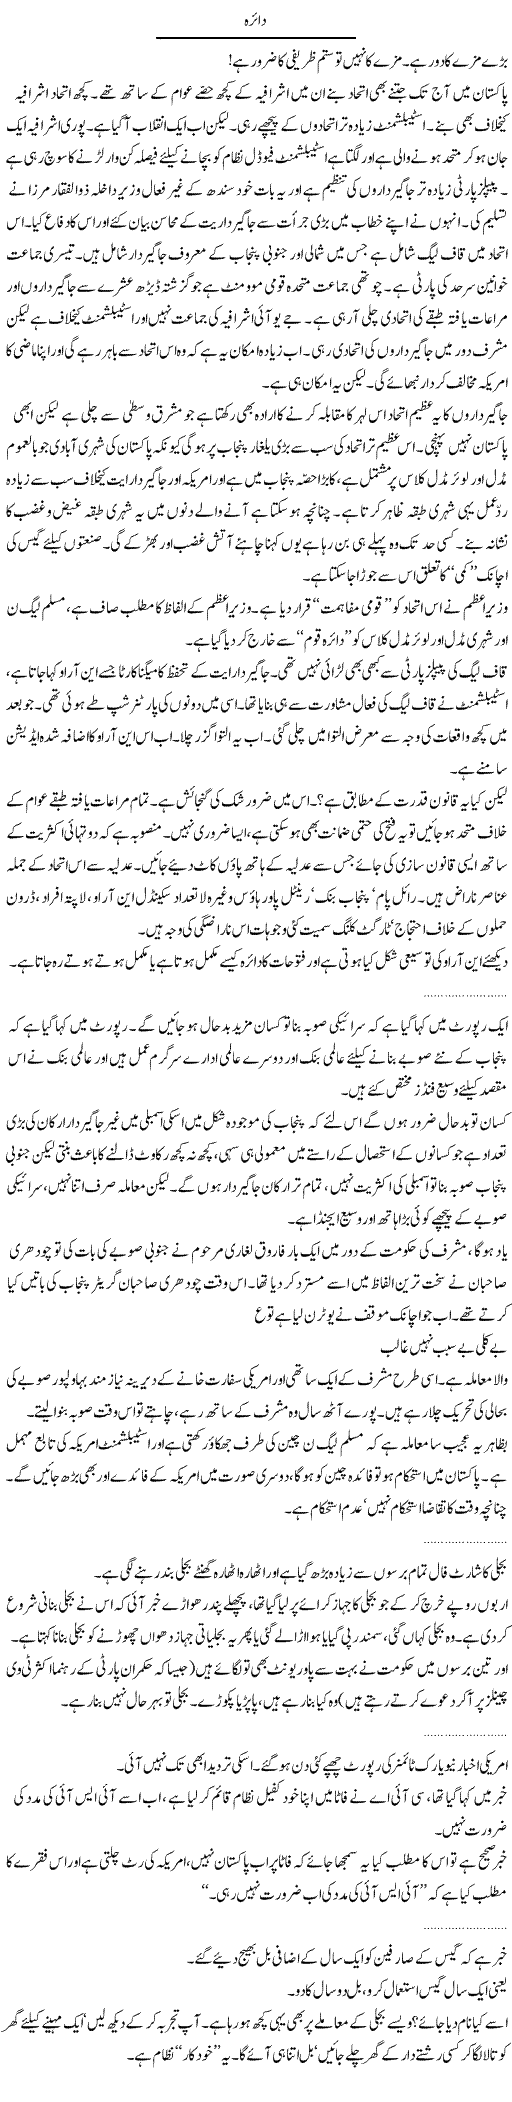 Establishment and Politics Express Column Abdullah Tariq 22 April 2011